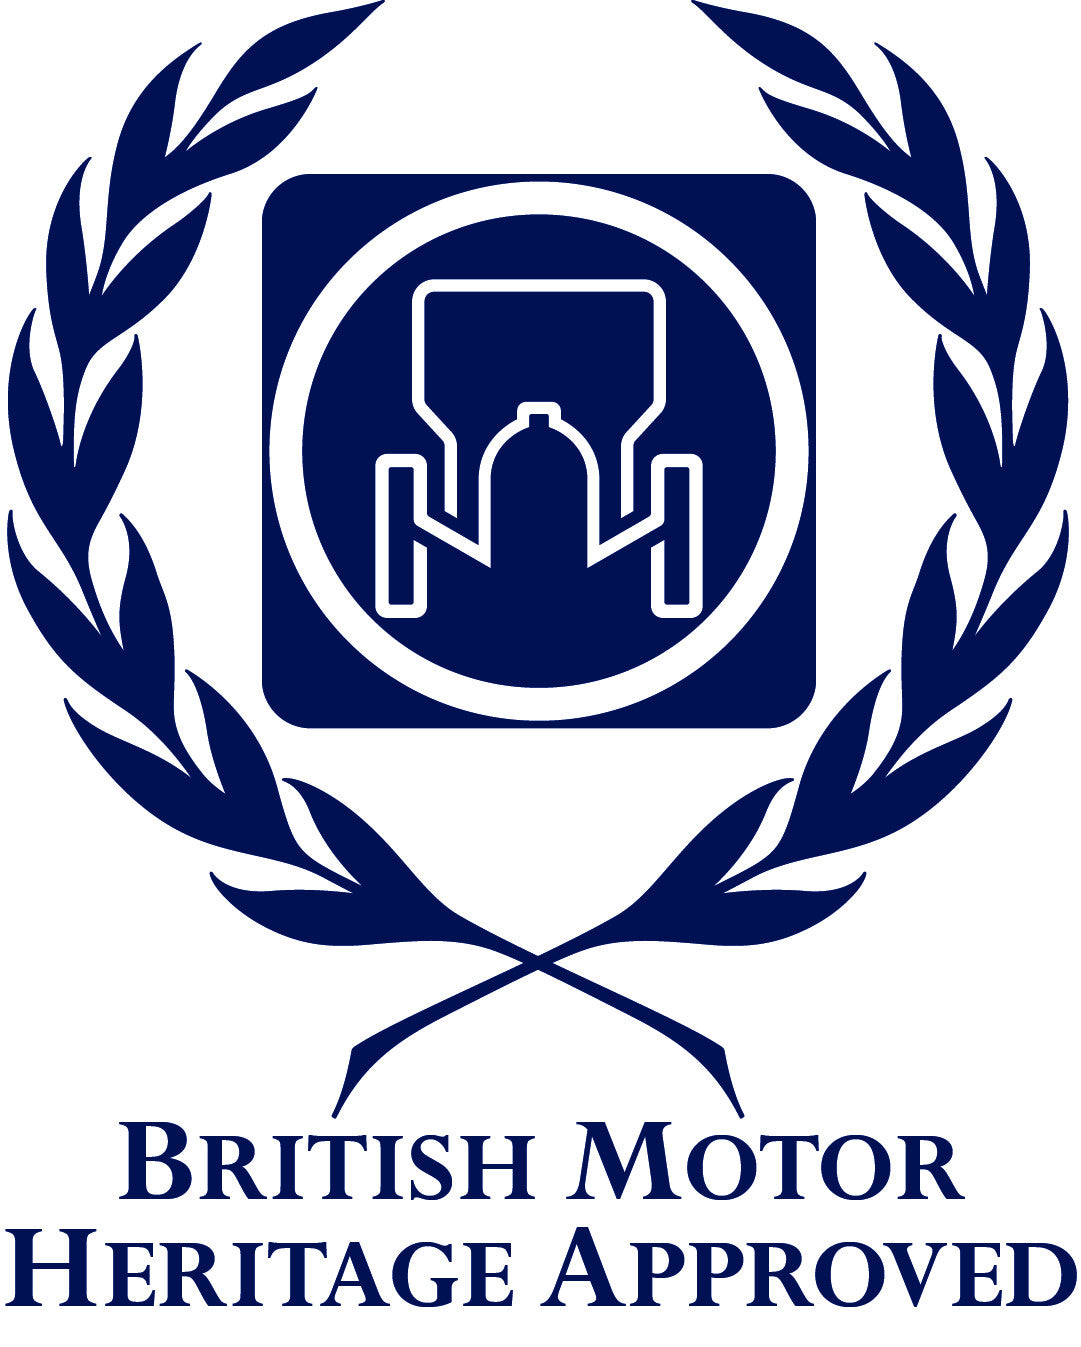 Vitesse Global Ltd is now British Motor Heritage Approved